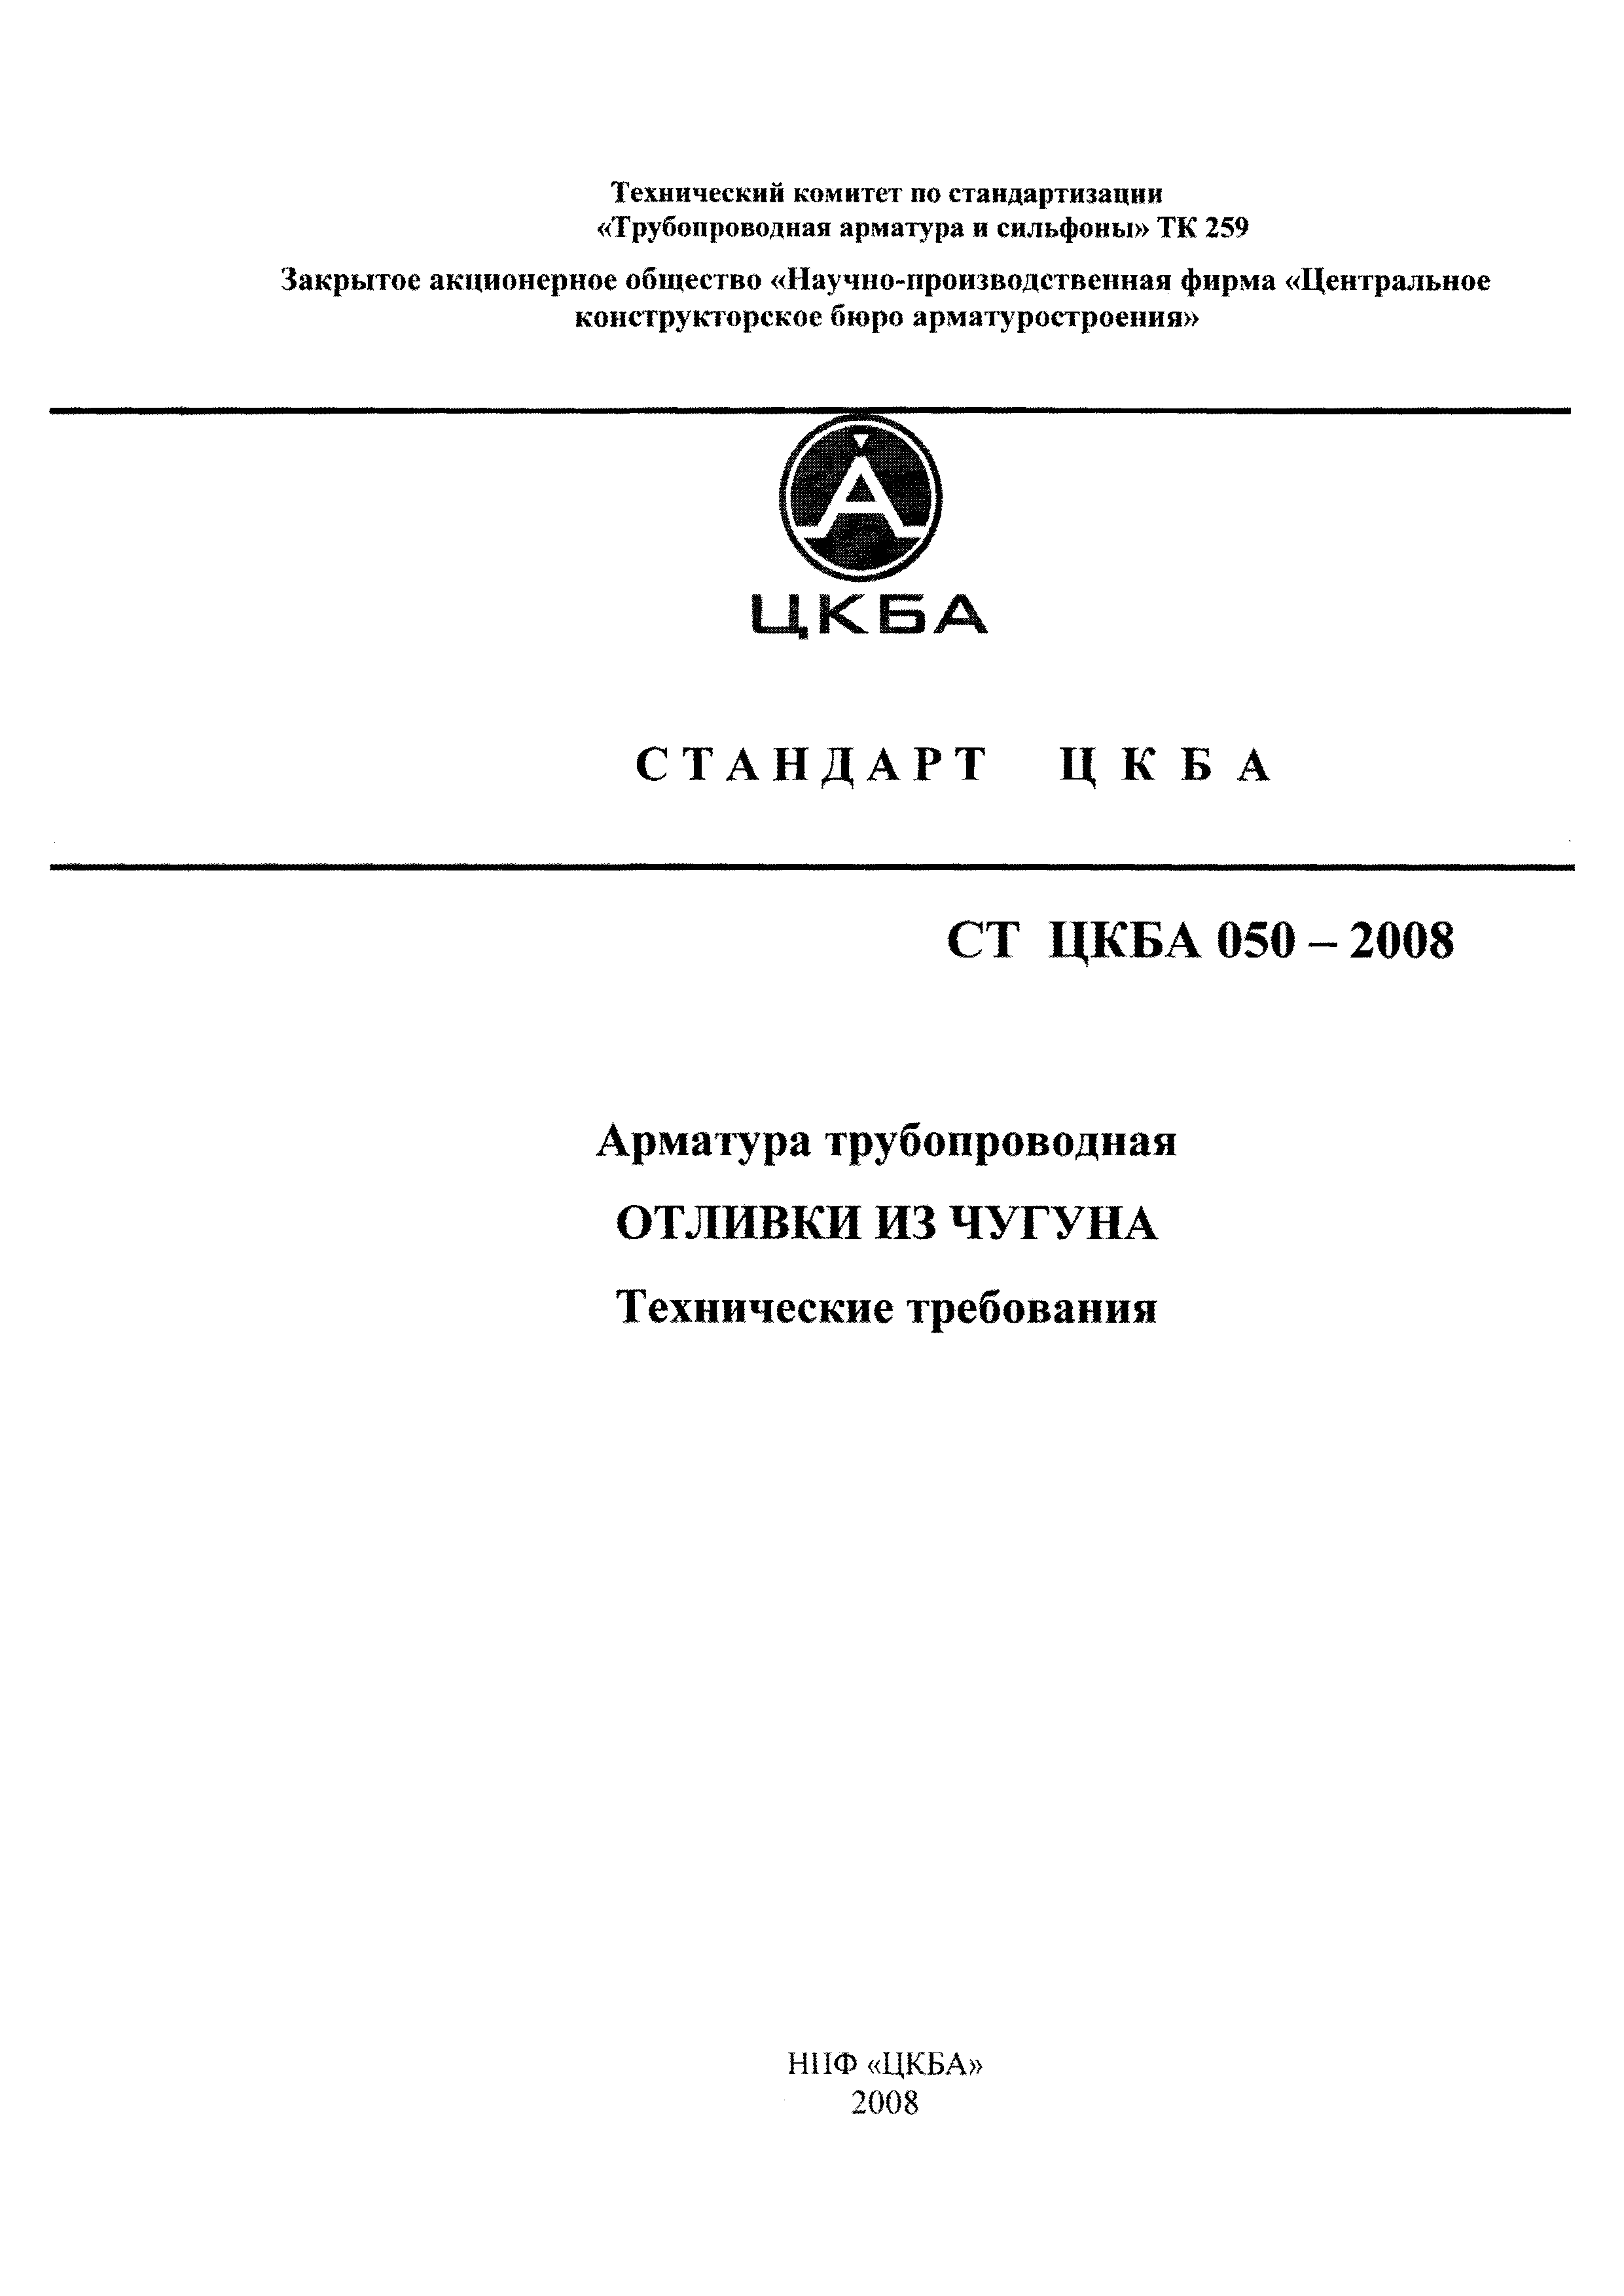 СТ ЦКБА 050-2008